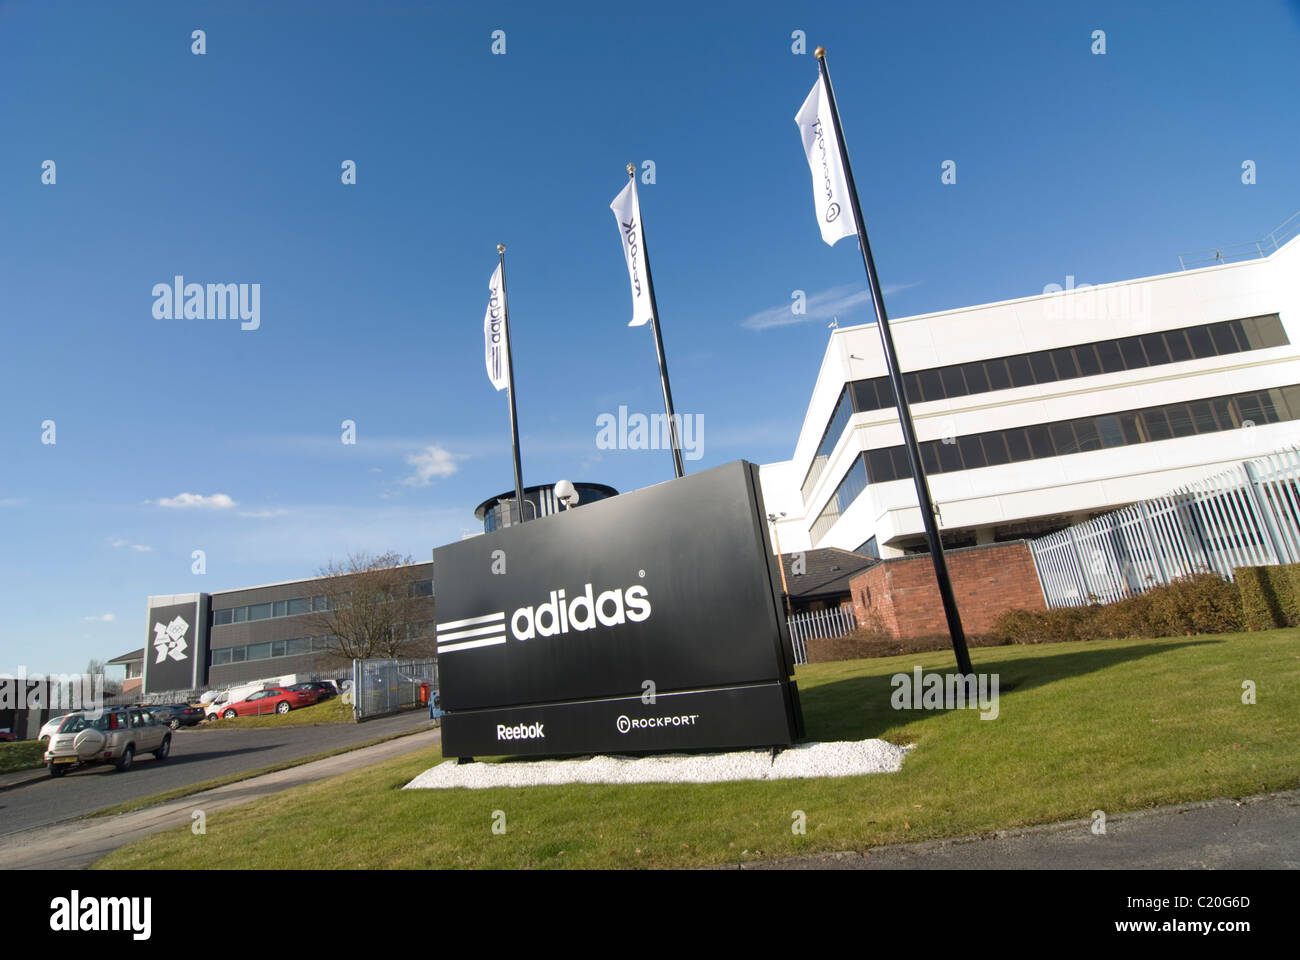 Adidas Business Headquarters Stockport 